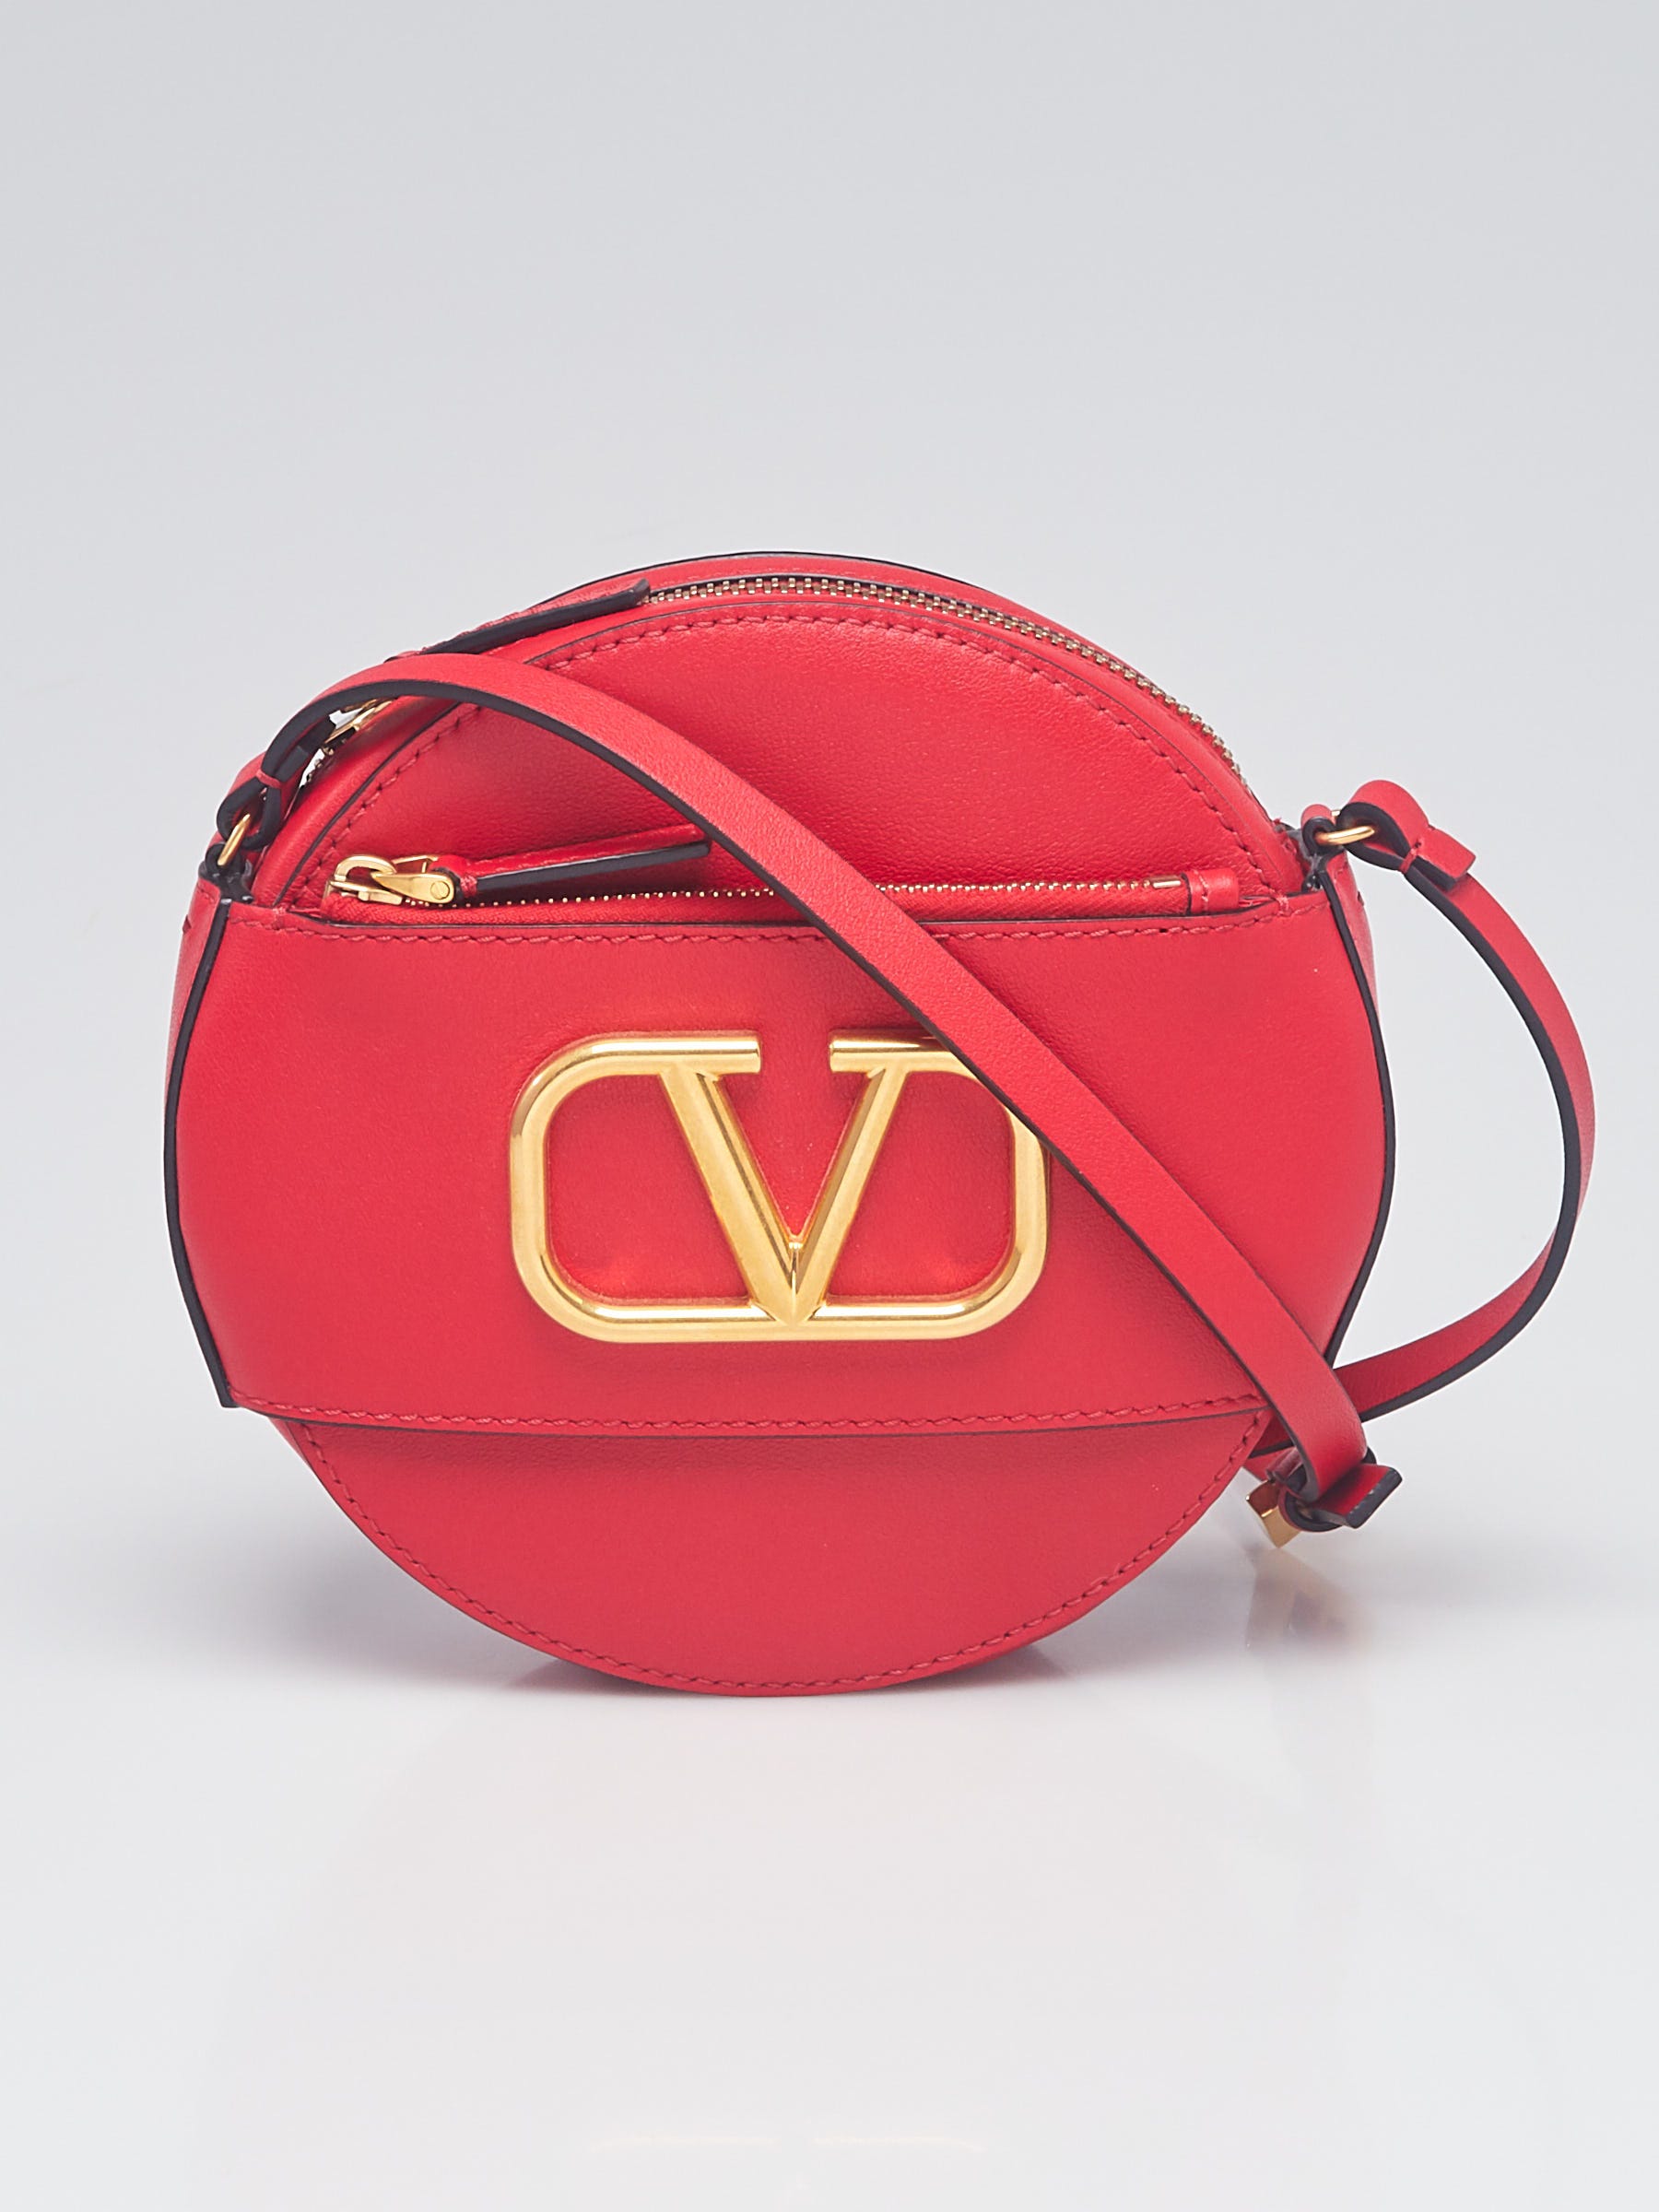 RED valentino bag NEW from Valentino Garavani camera shoulder bag